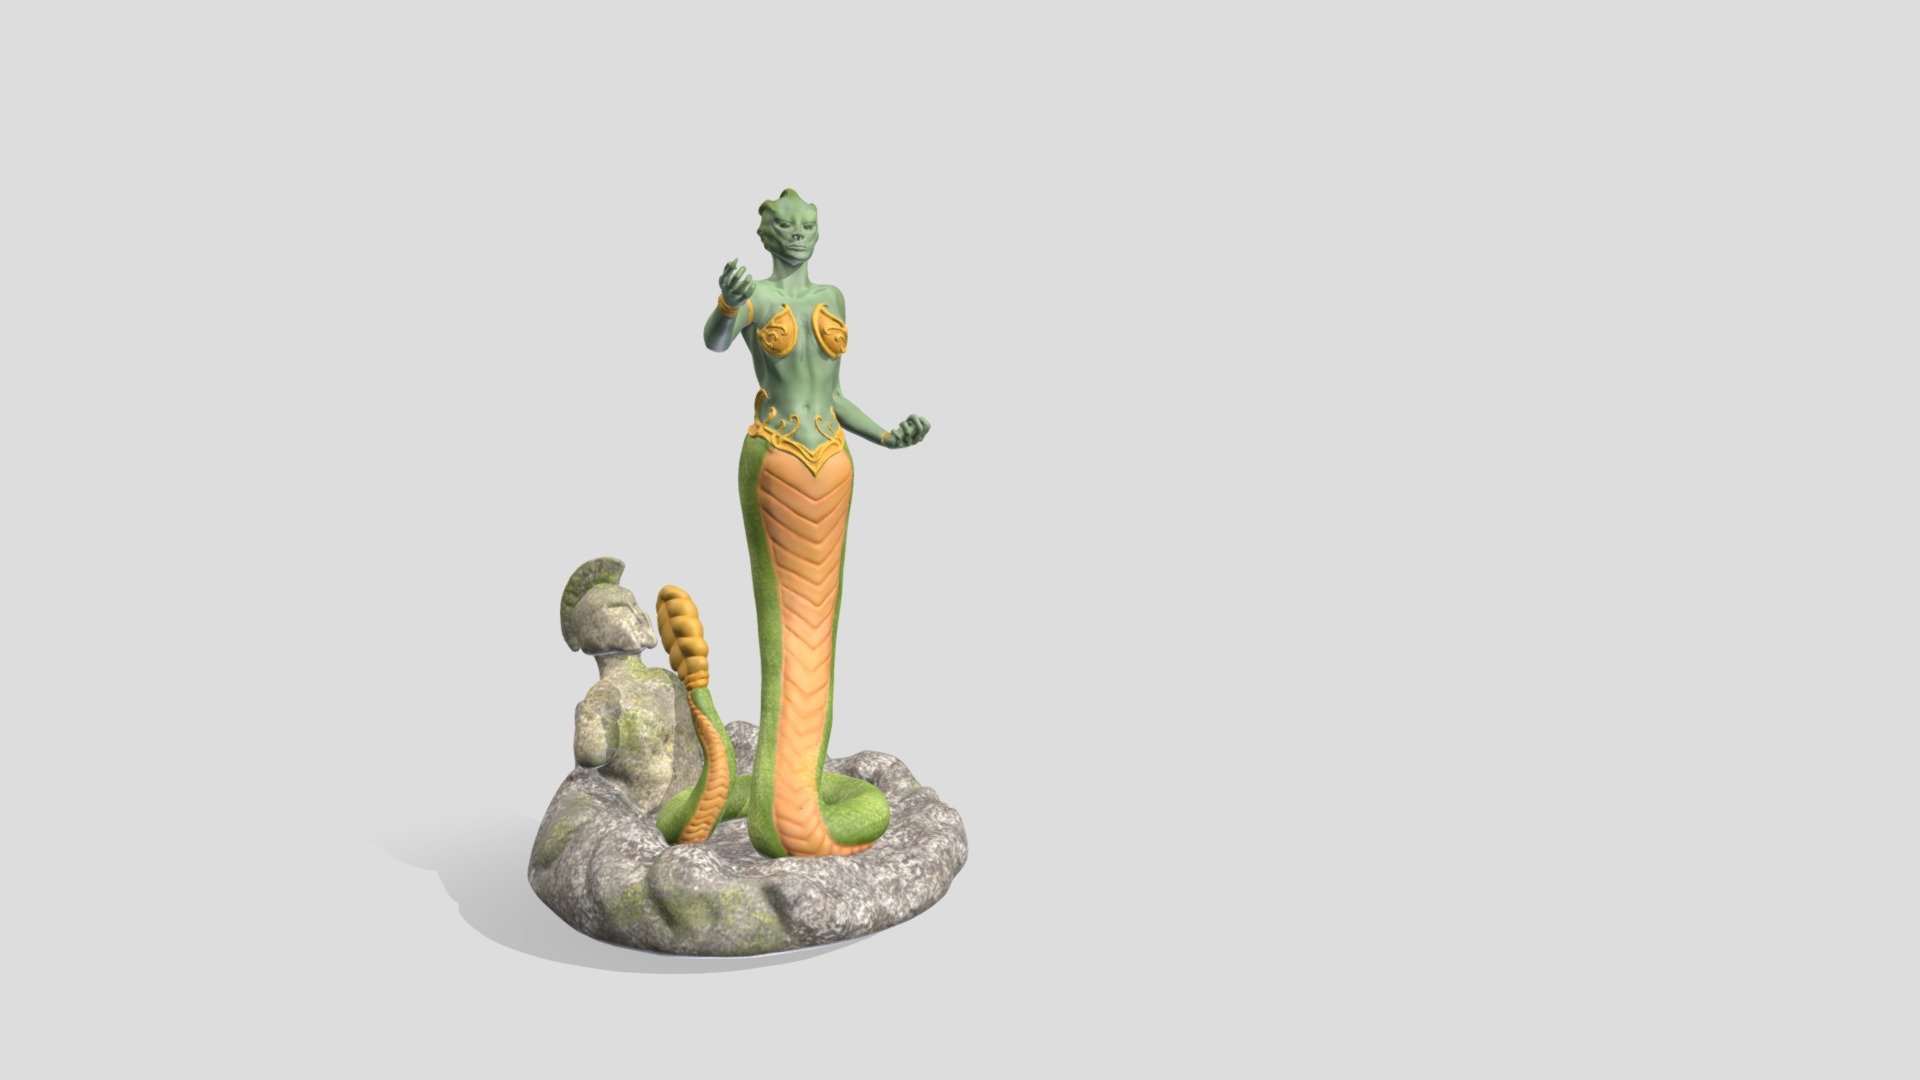 Trabajo hecho em Sculptris, espero que os guste   ;) - Medusa Mythological - 3D model by IsaacArroyo 3d model